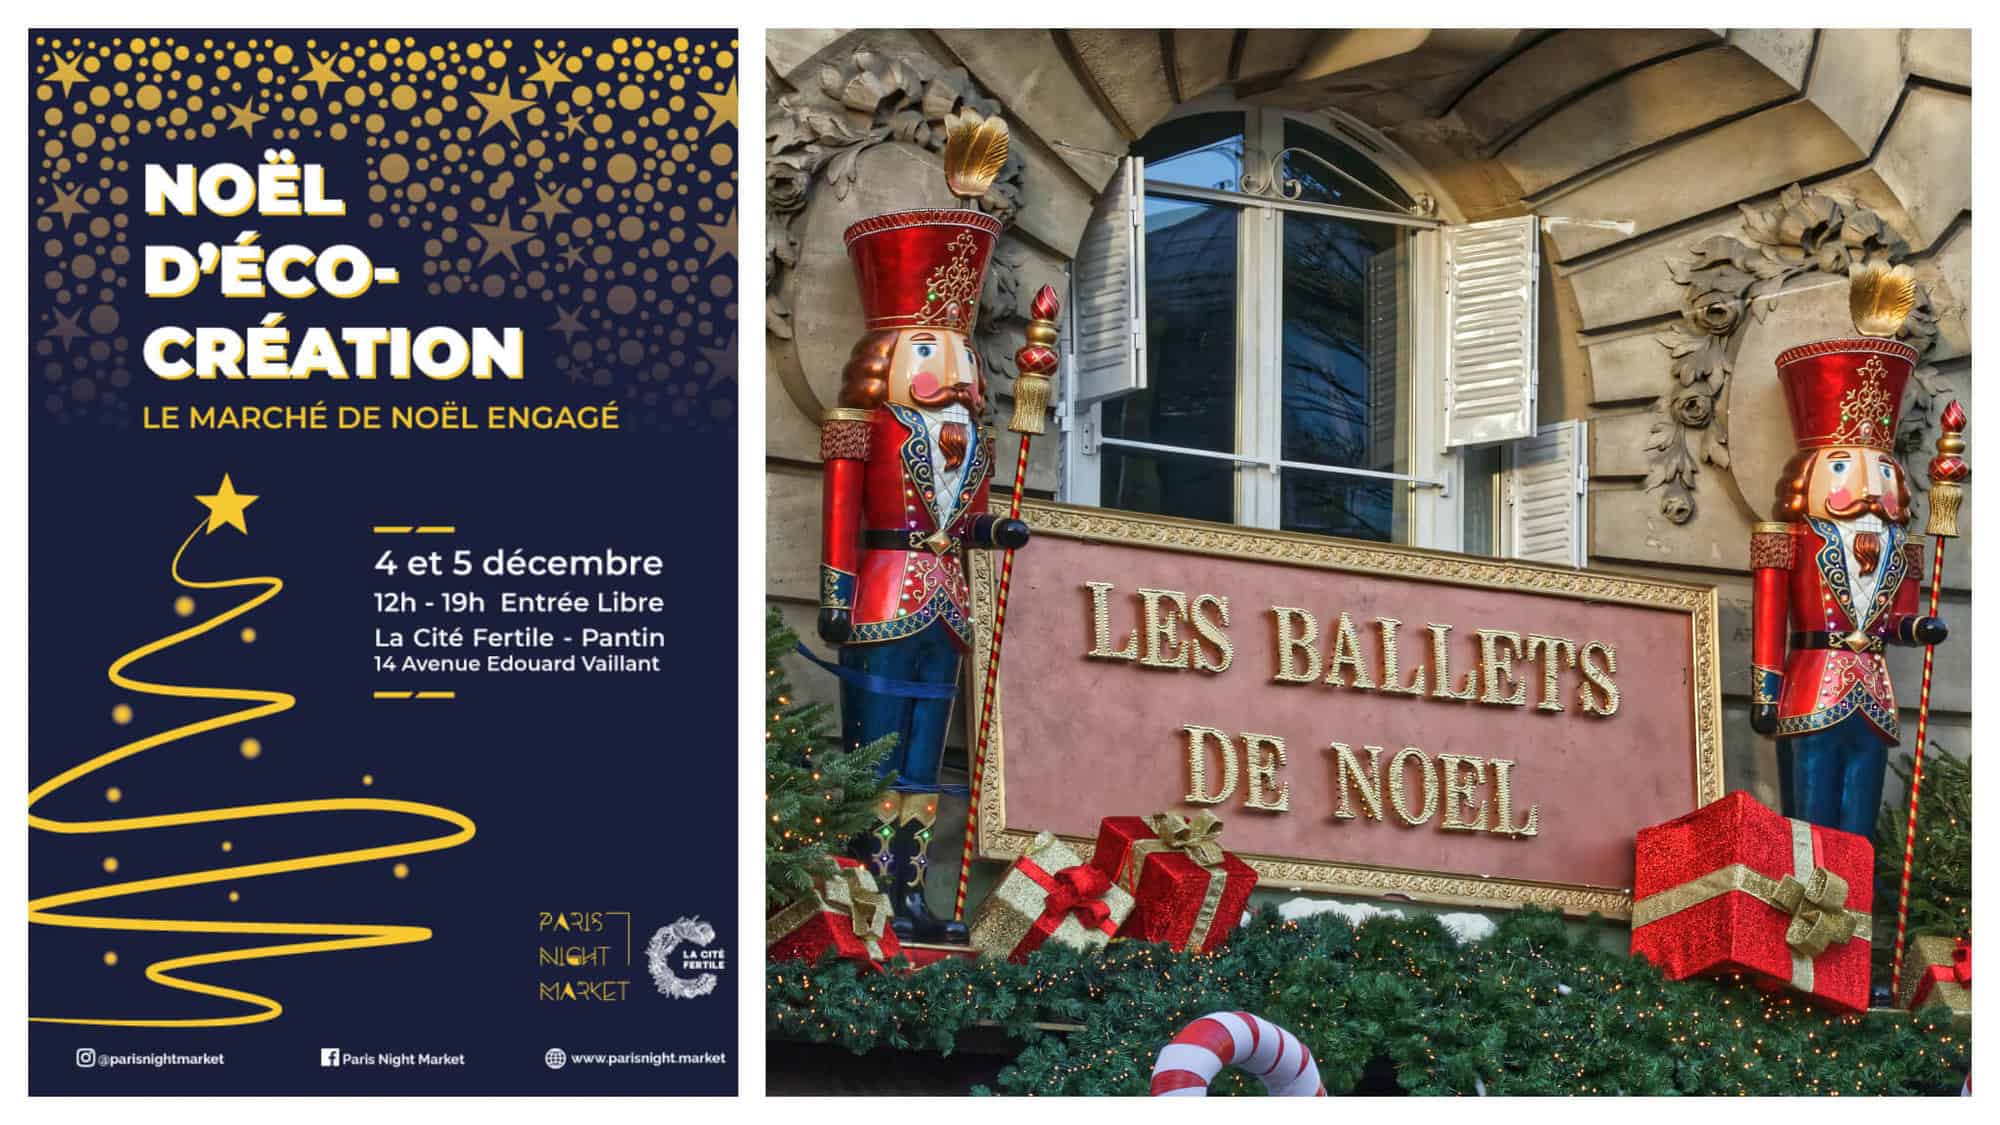 Left: the promotional poster for the Christmas market at La Cité Fertile. Right: a sign on a Parisian facade saying 'Les Ballets de Noel' surrounded by Christmas decorations.